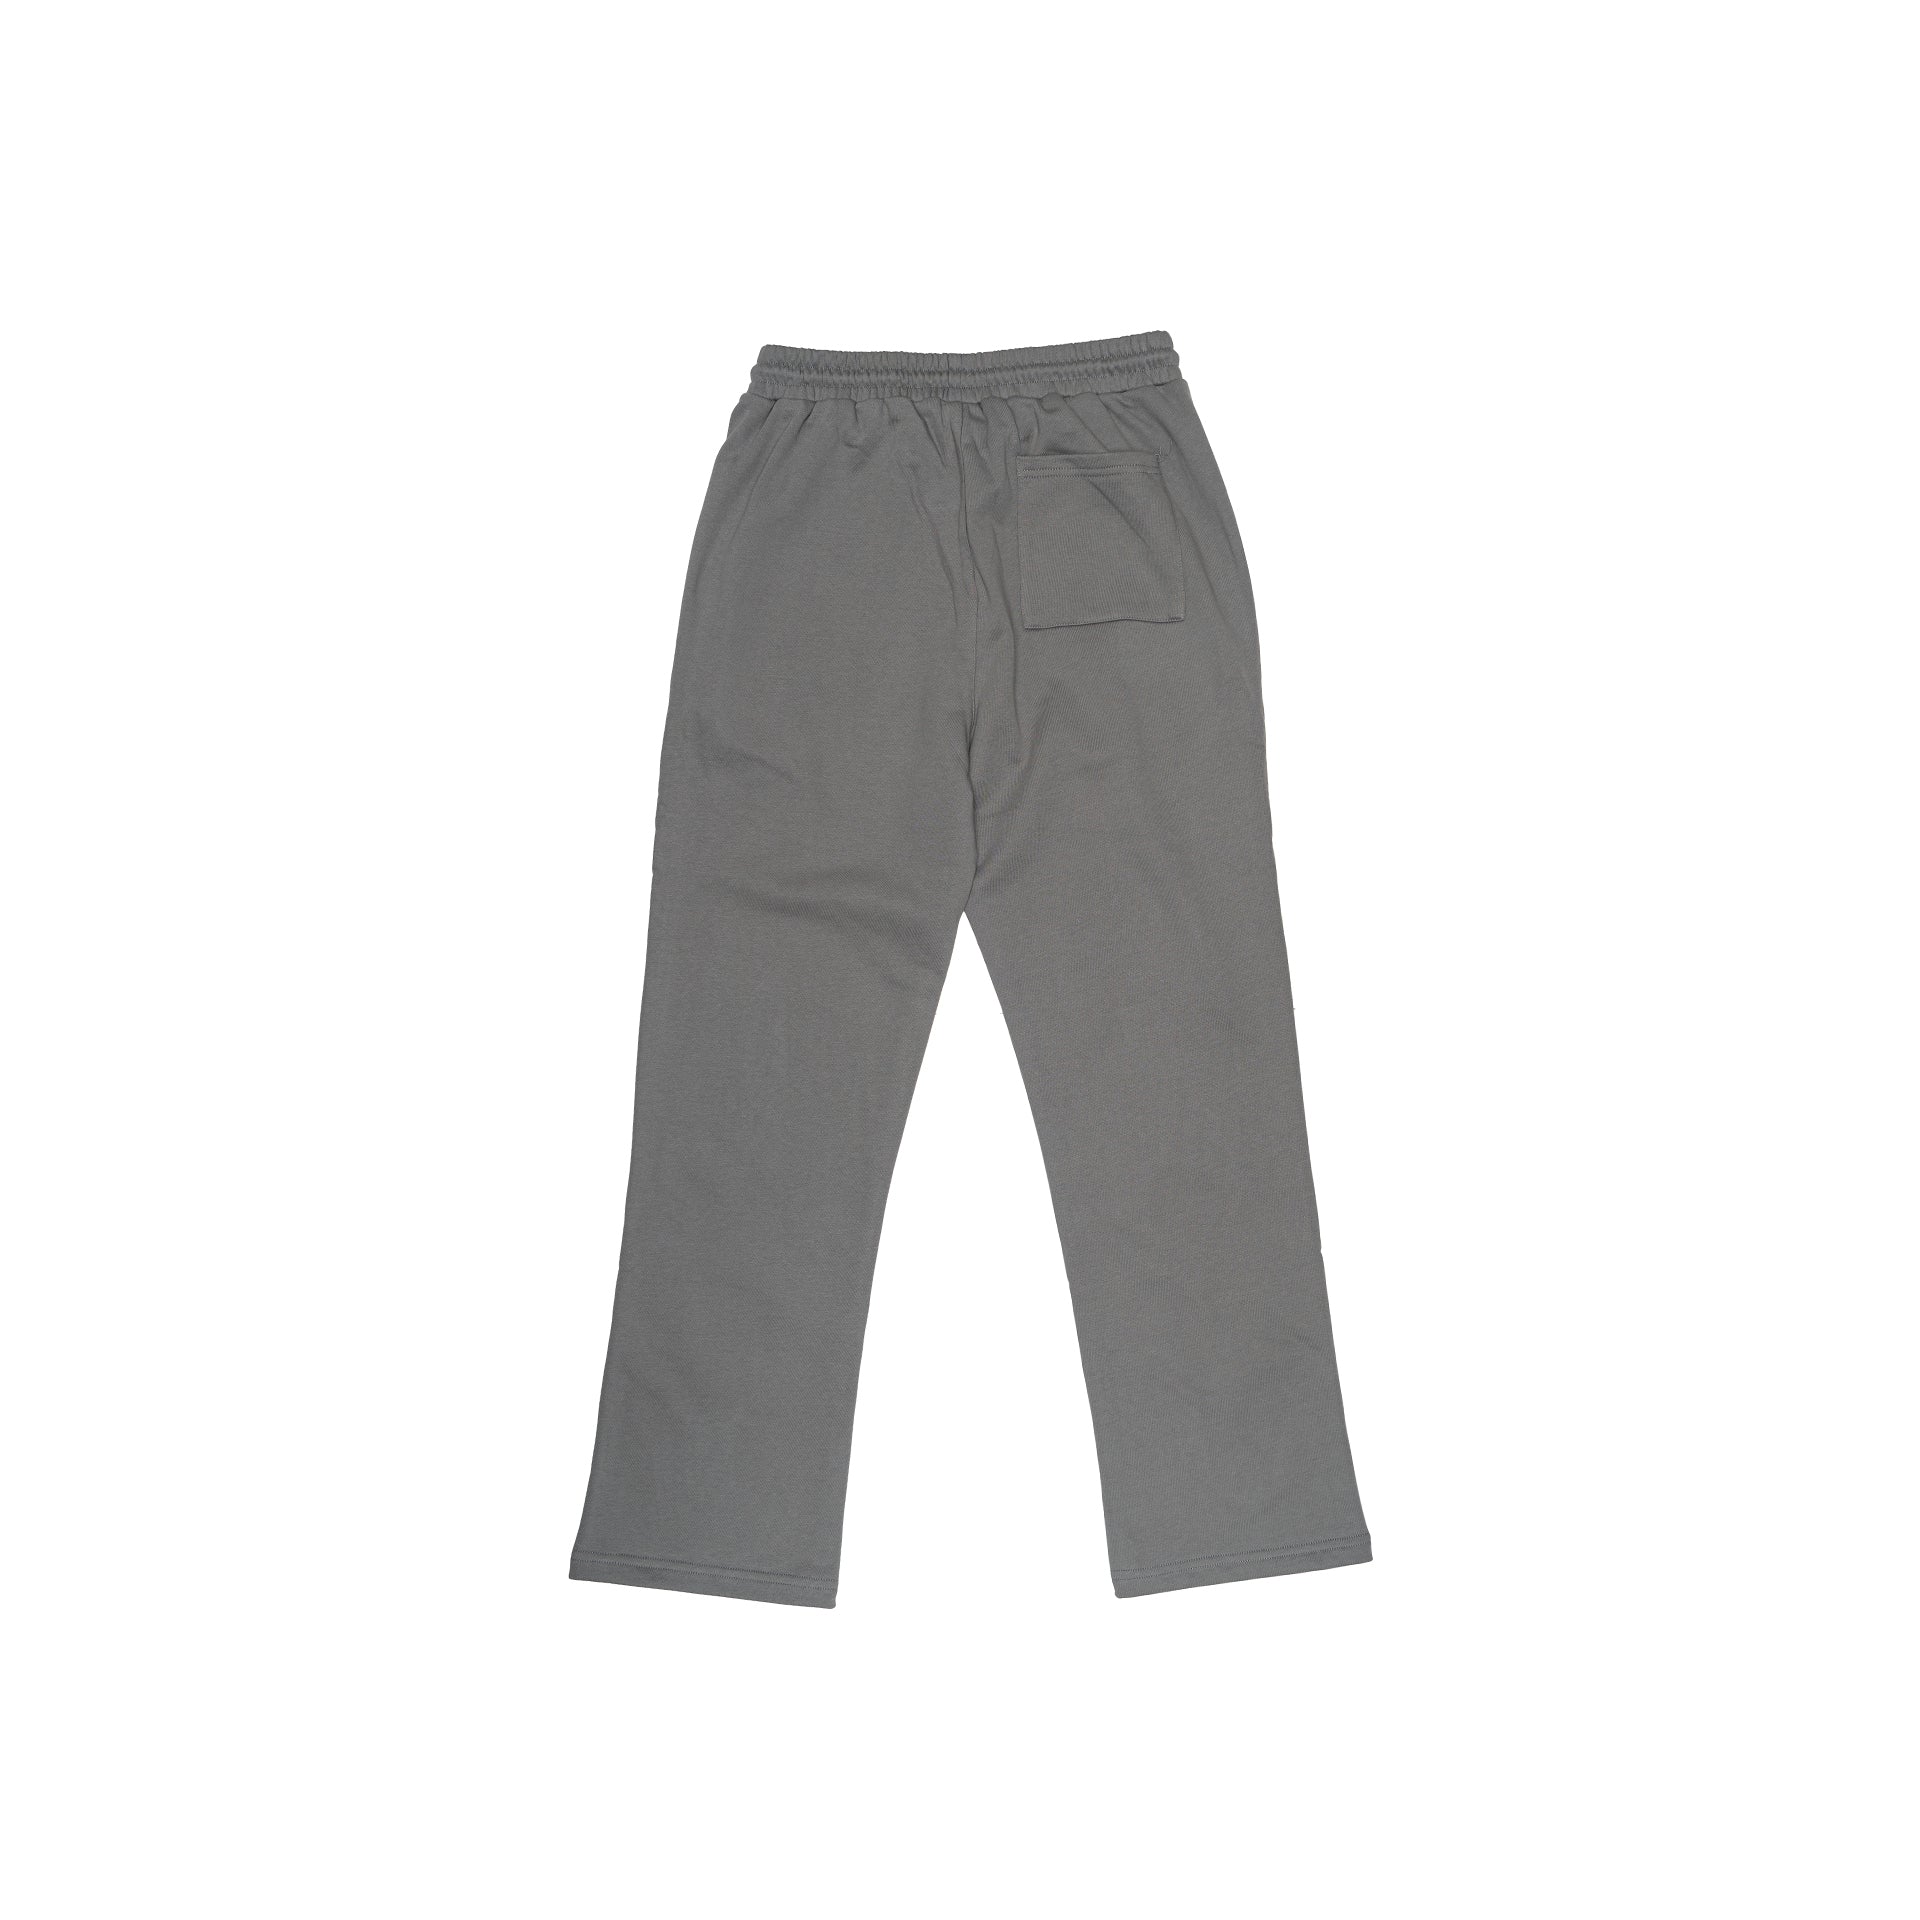 Gray Cotton Sweatpants by Brandtionary